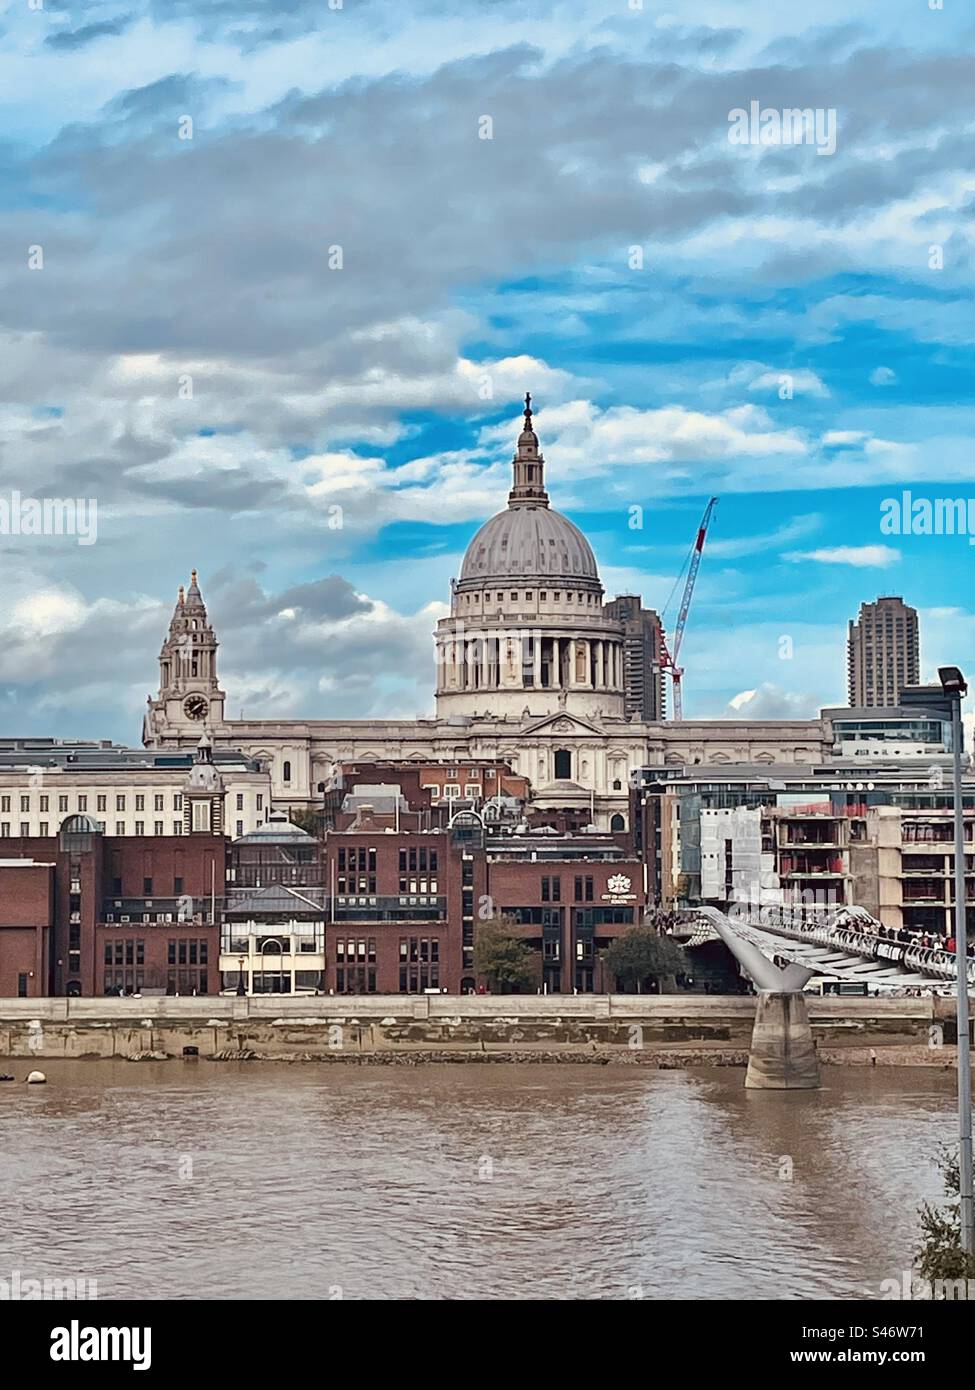 Wunderschöner Blick auf die St Paul's Cathedral in London Stockfoto